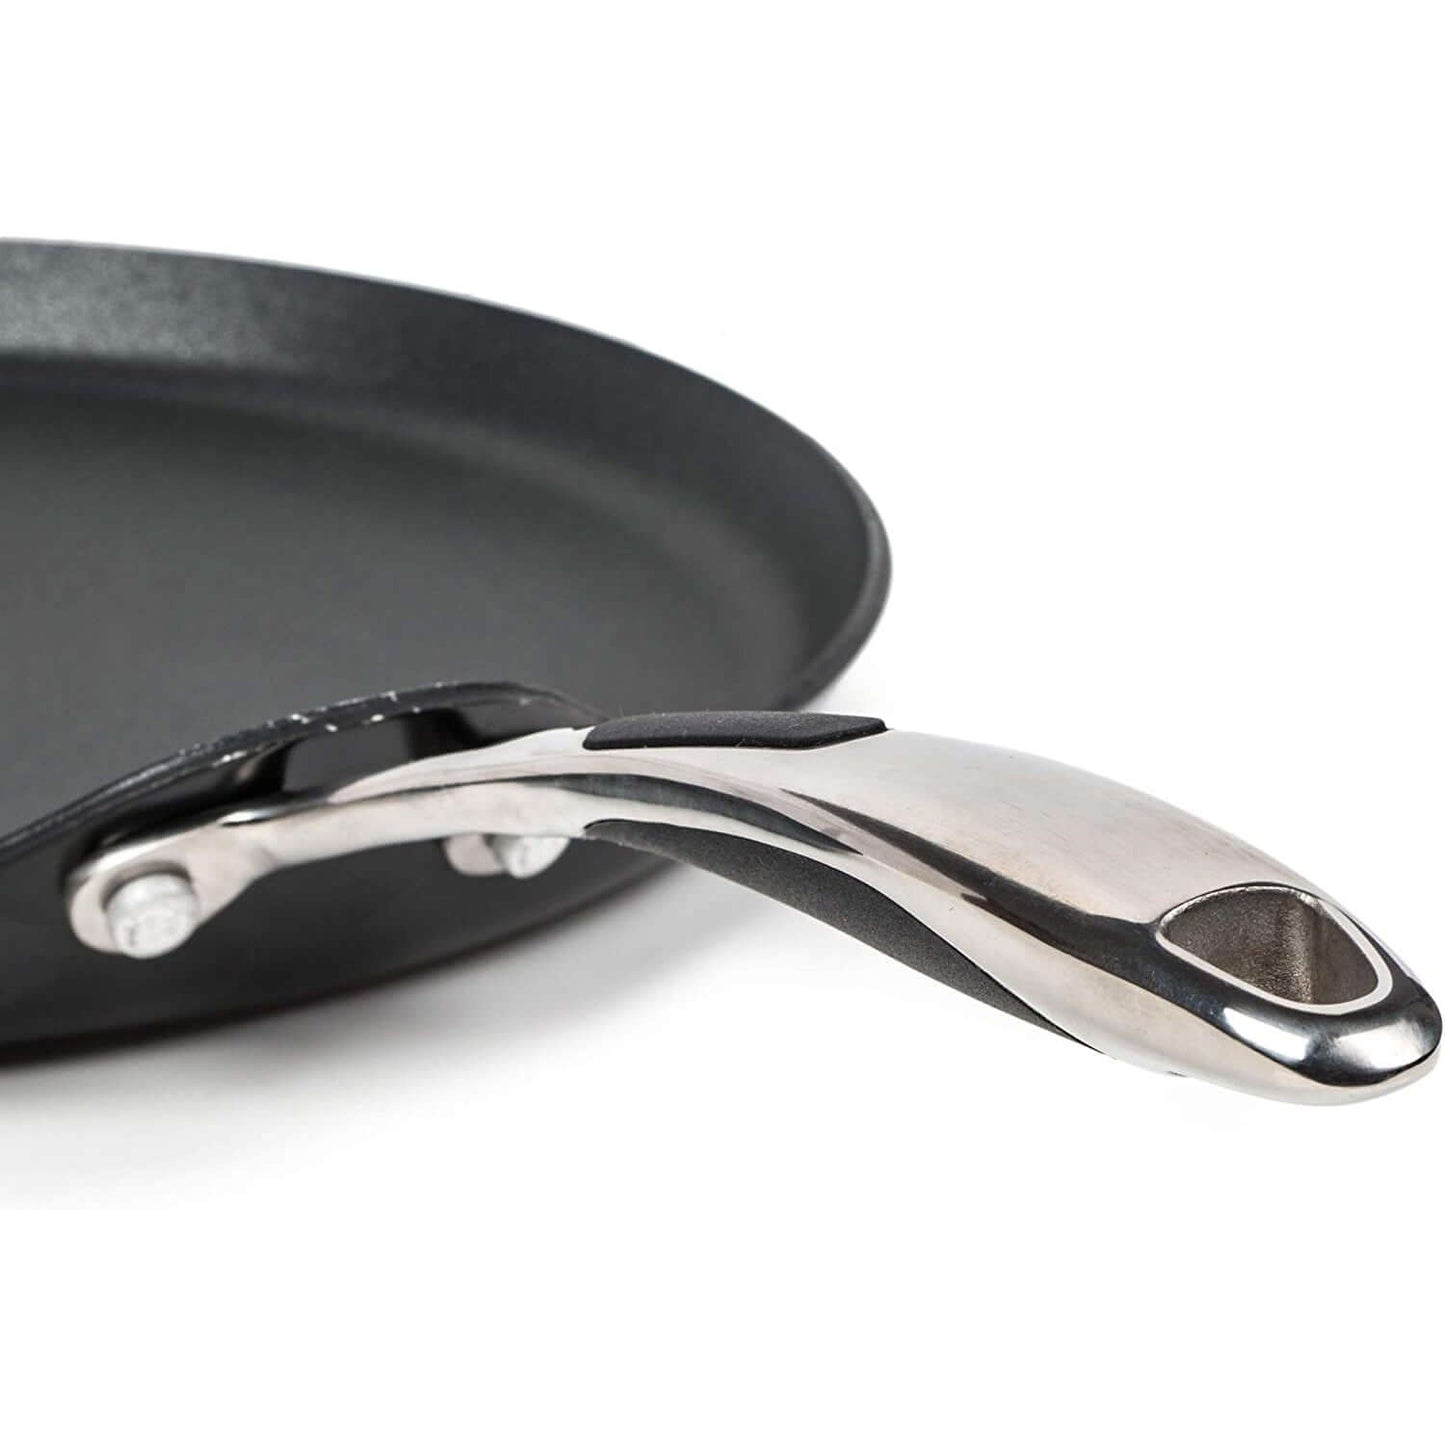 24cm Grey Stainless Steel Pancake Pan - Guaranteed Non-Stick Crepe Pan  – Induction Suitable